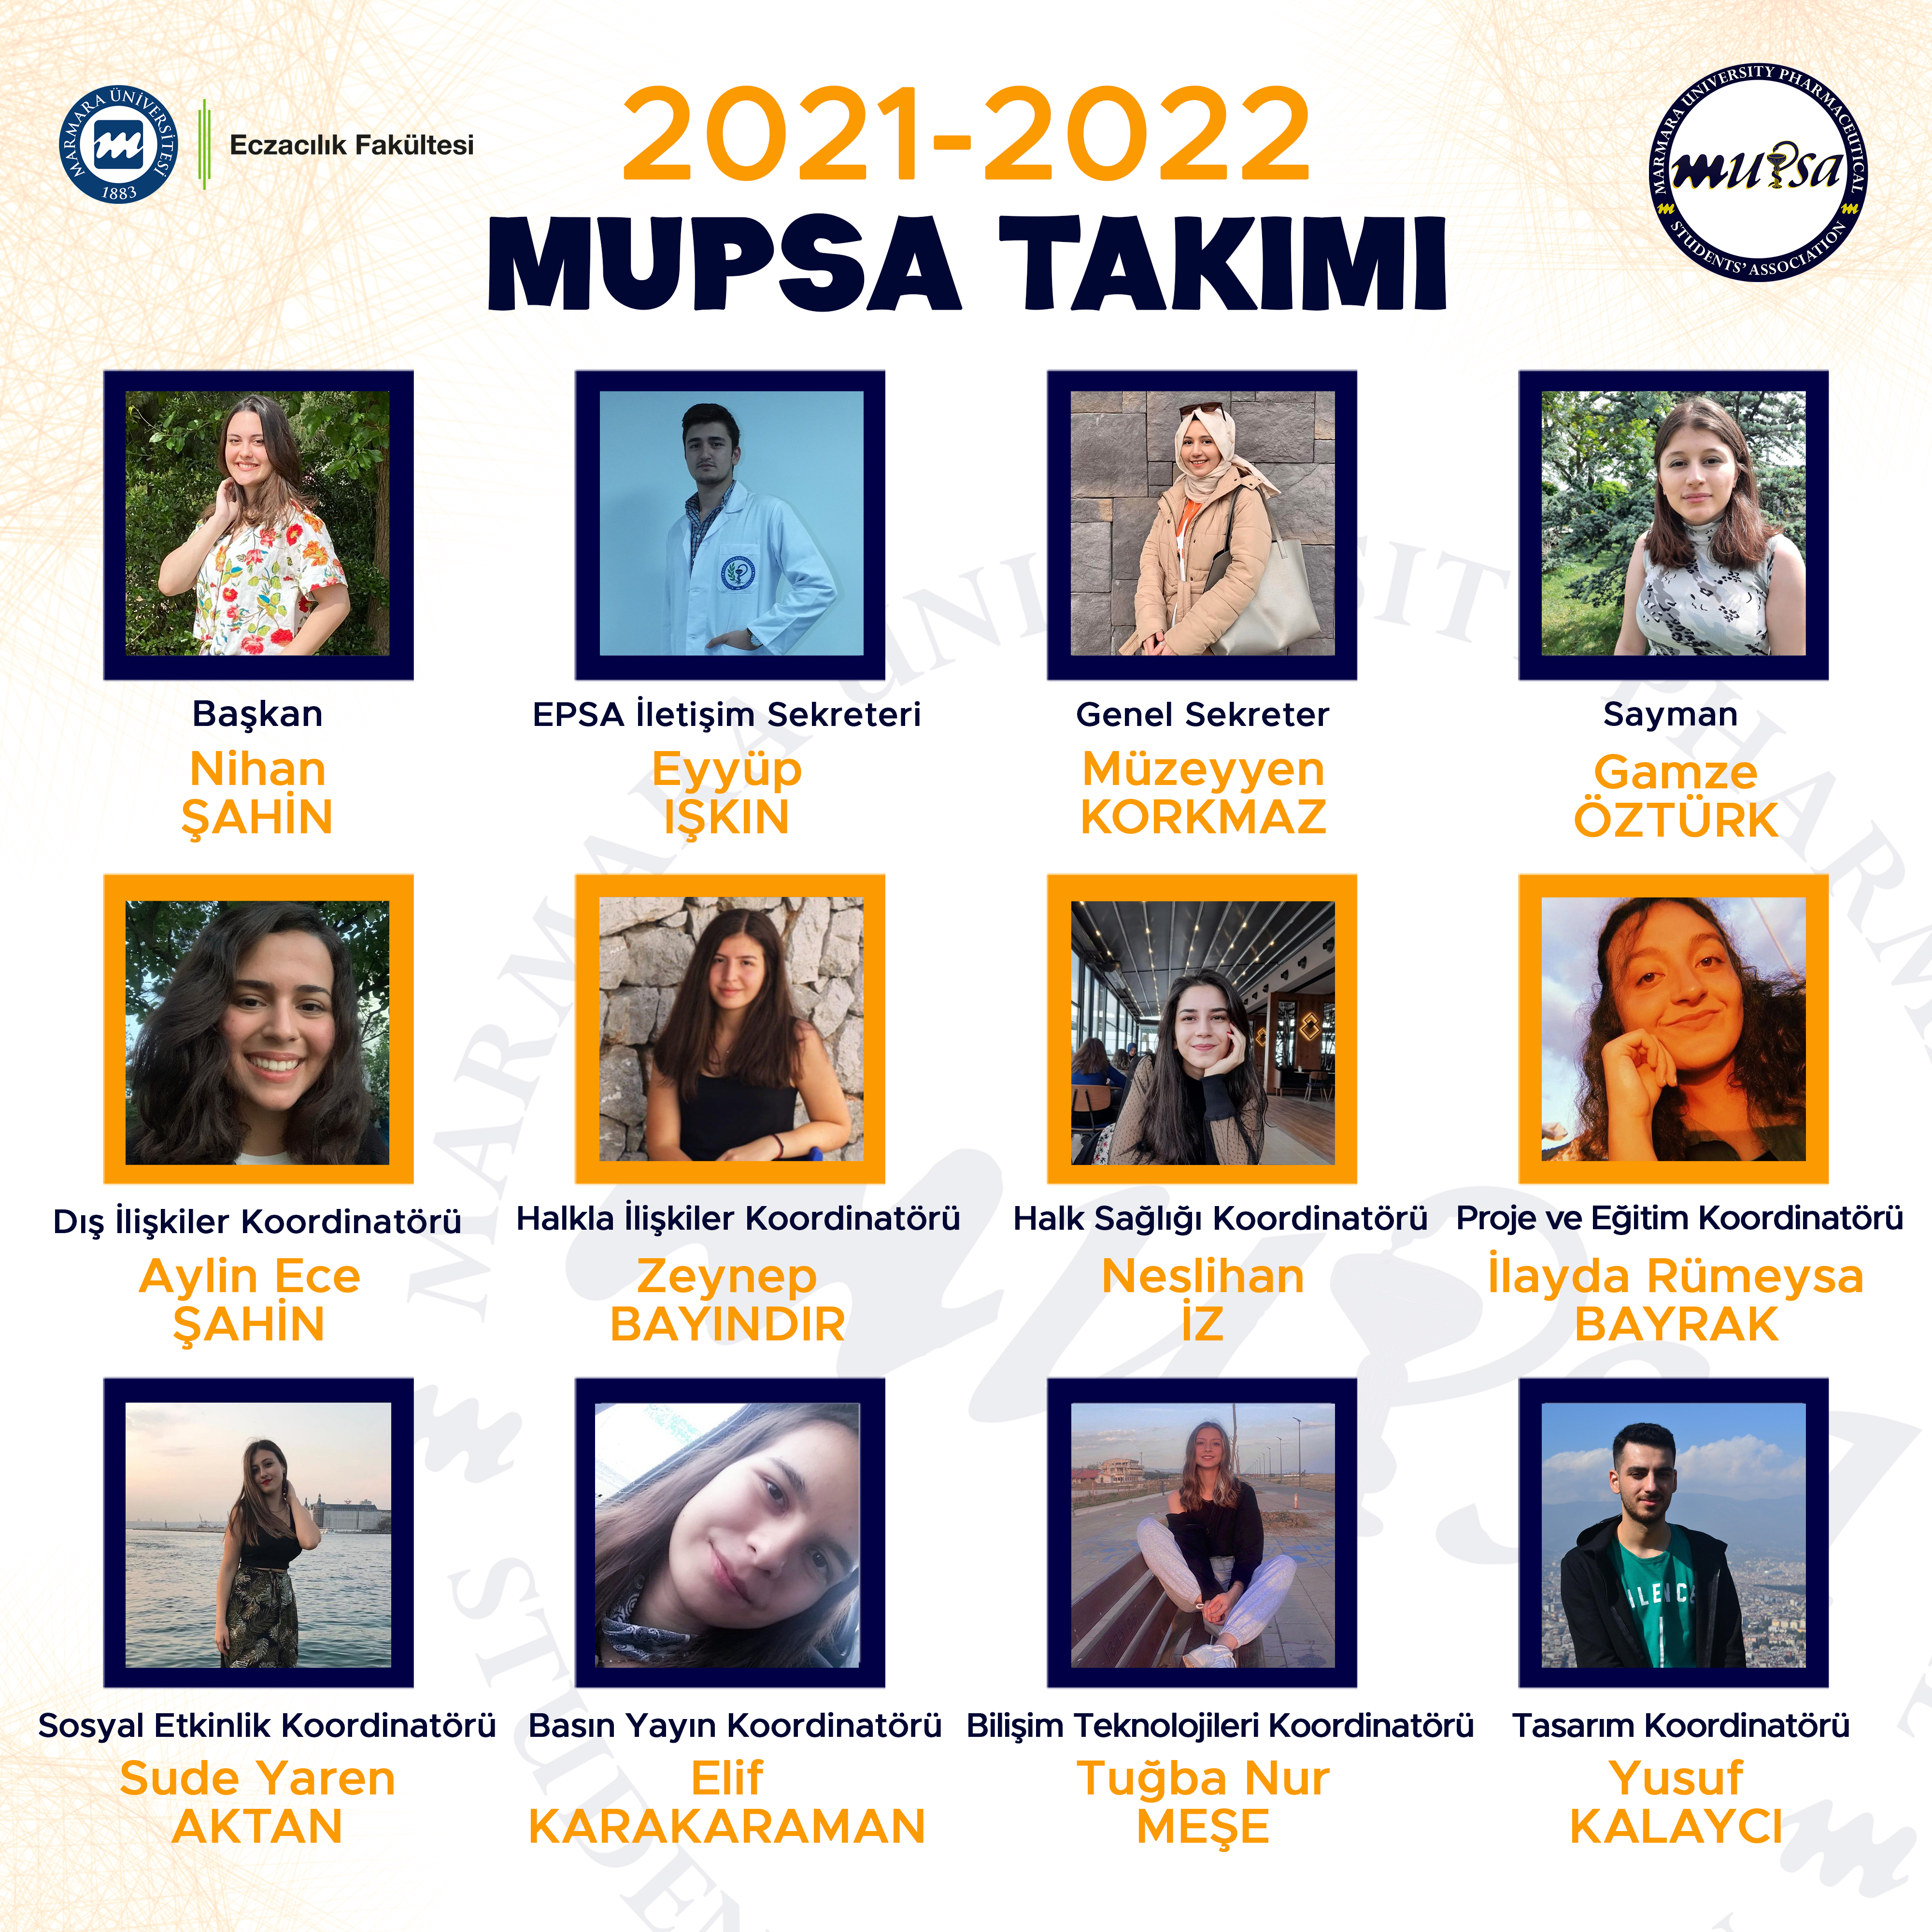 MUPSA 2021-2022 Yönetim Kurulu Afişi.jpg (5.83 MB)